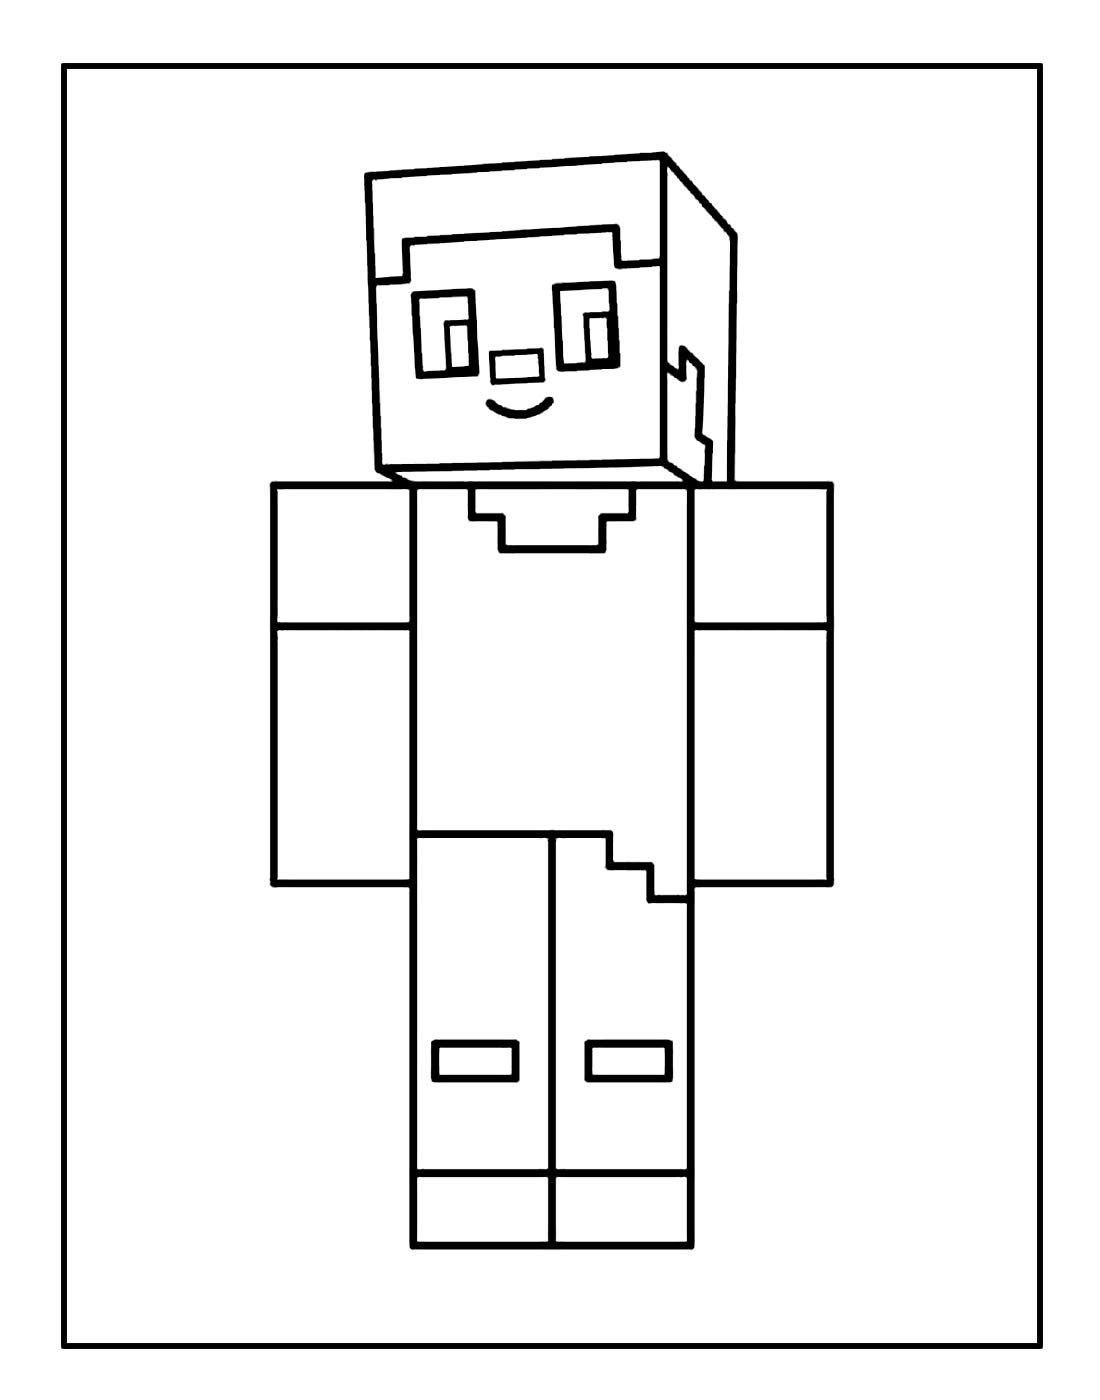 Meus Trabalhos Pedagógicos ®: Minecraft - Para Imprimir E Colorir - Hd  Images  Minecraft para imprimir, Minecraft para colorir, Desenhos para  colorir minecraft